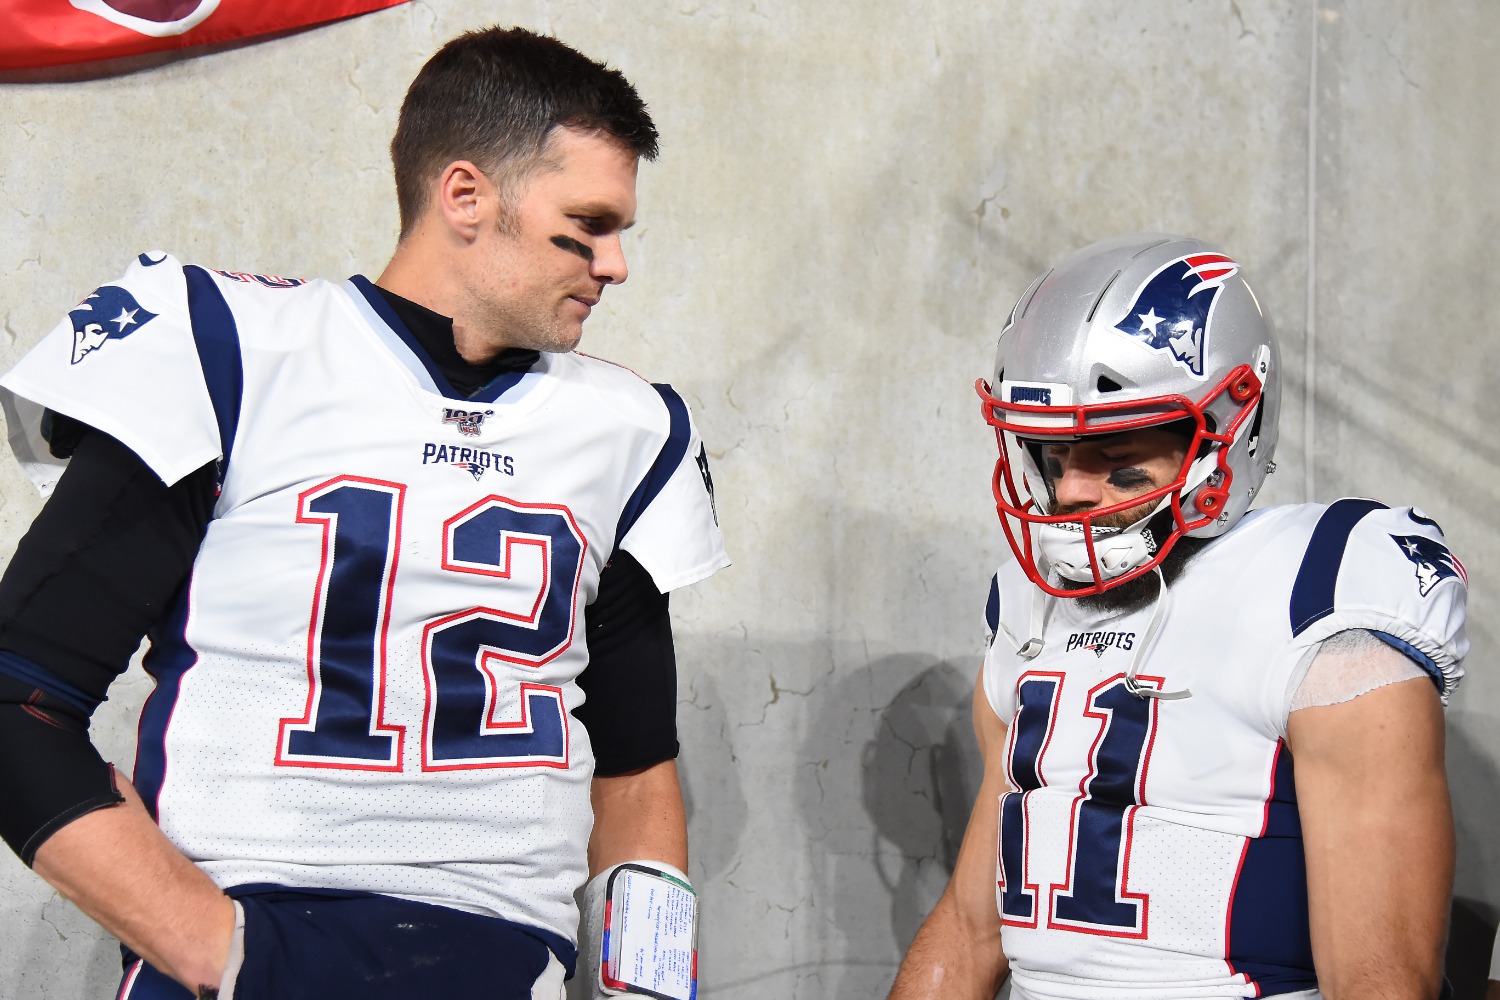 Julian Edelman sent a surprising message about Tom Brady after the quarterback left the Patriots this offseason.